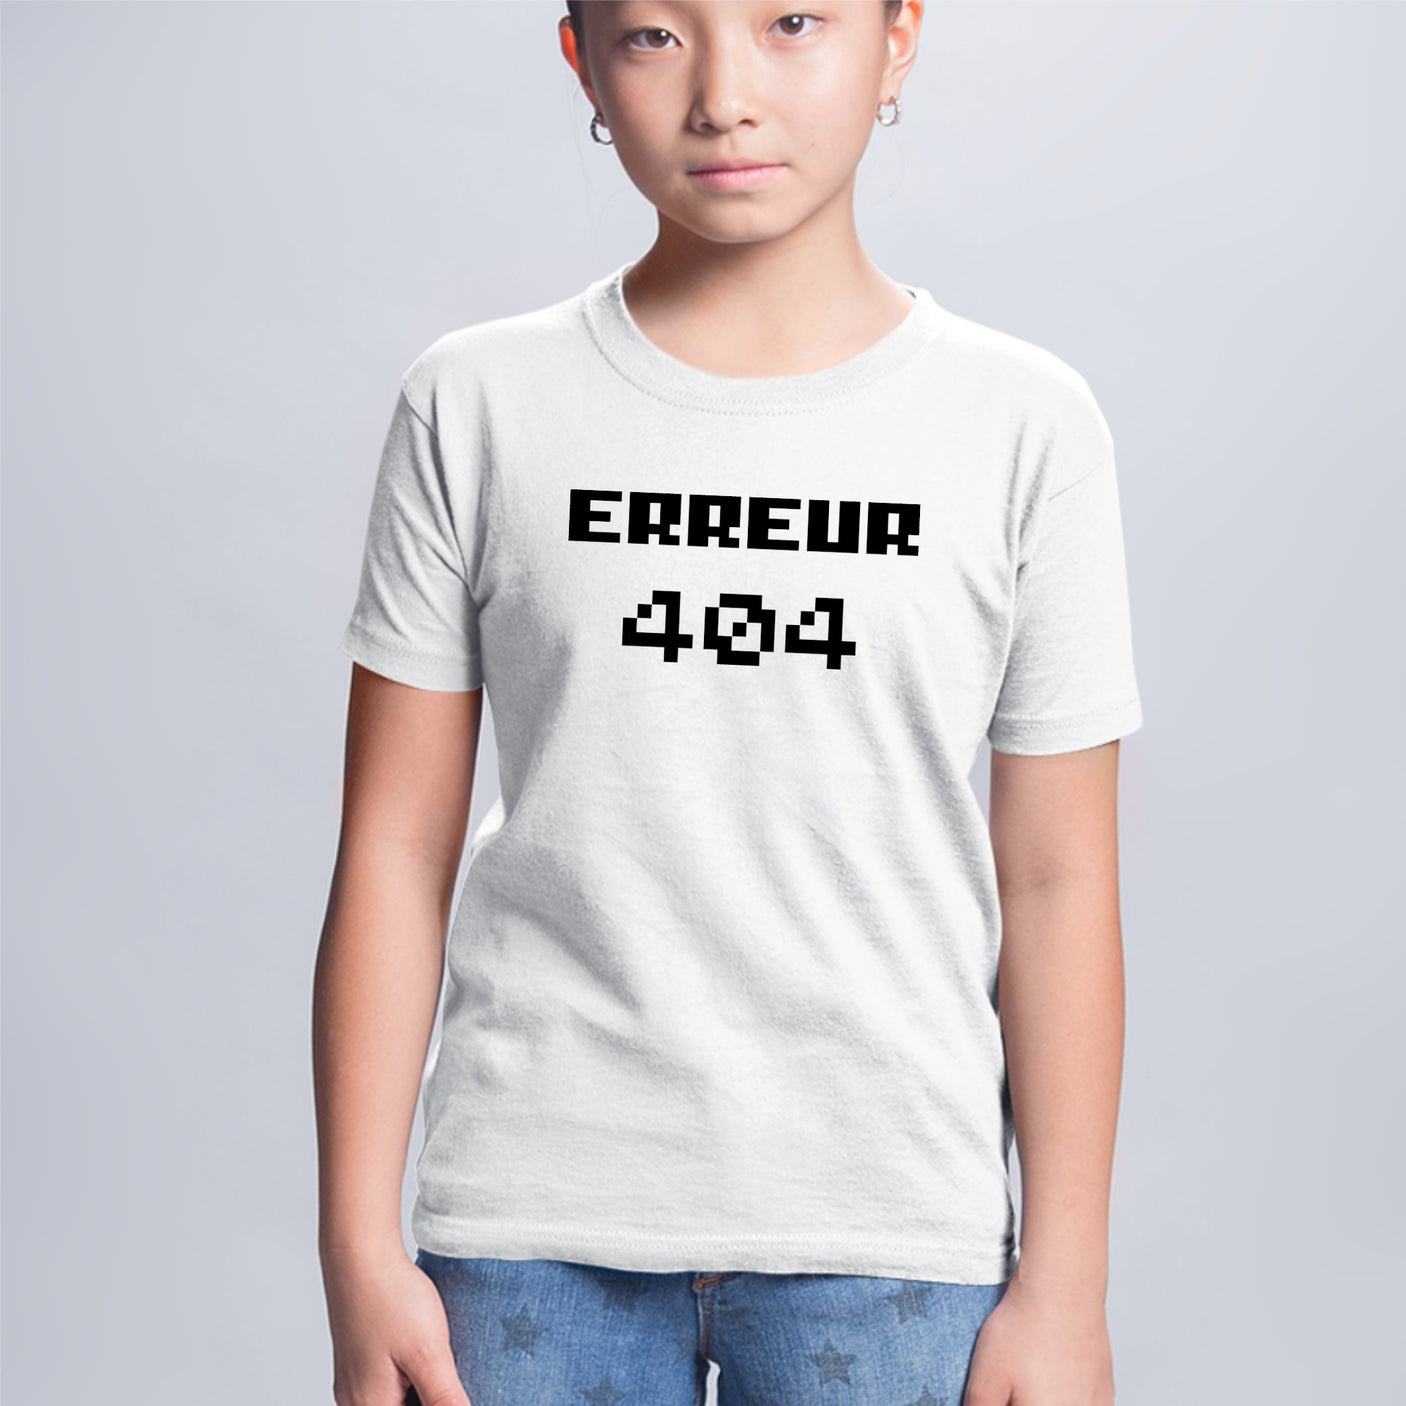 T-Shirt Enfant Erreur 404 Blanc